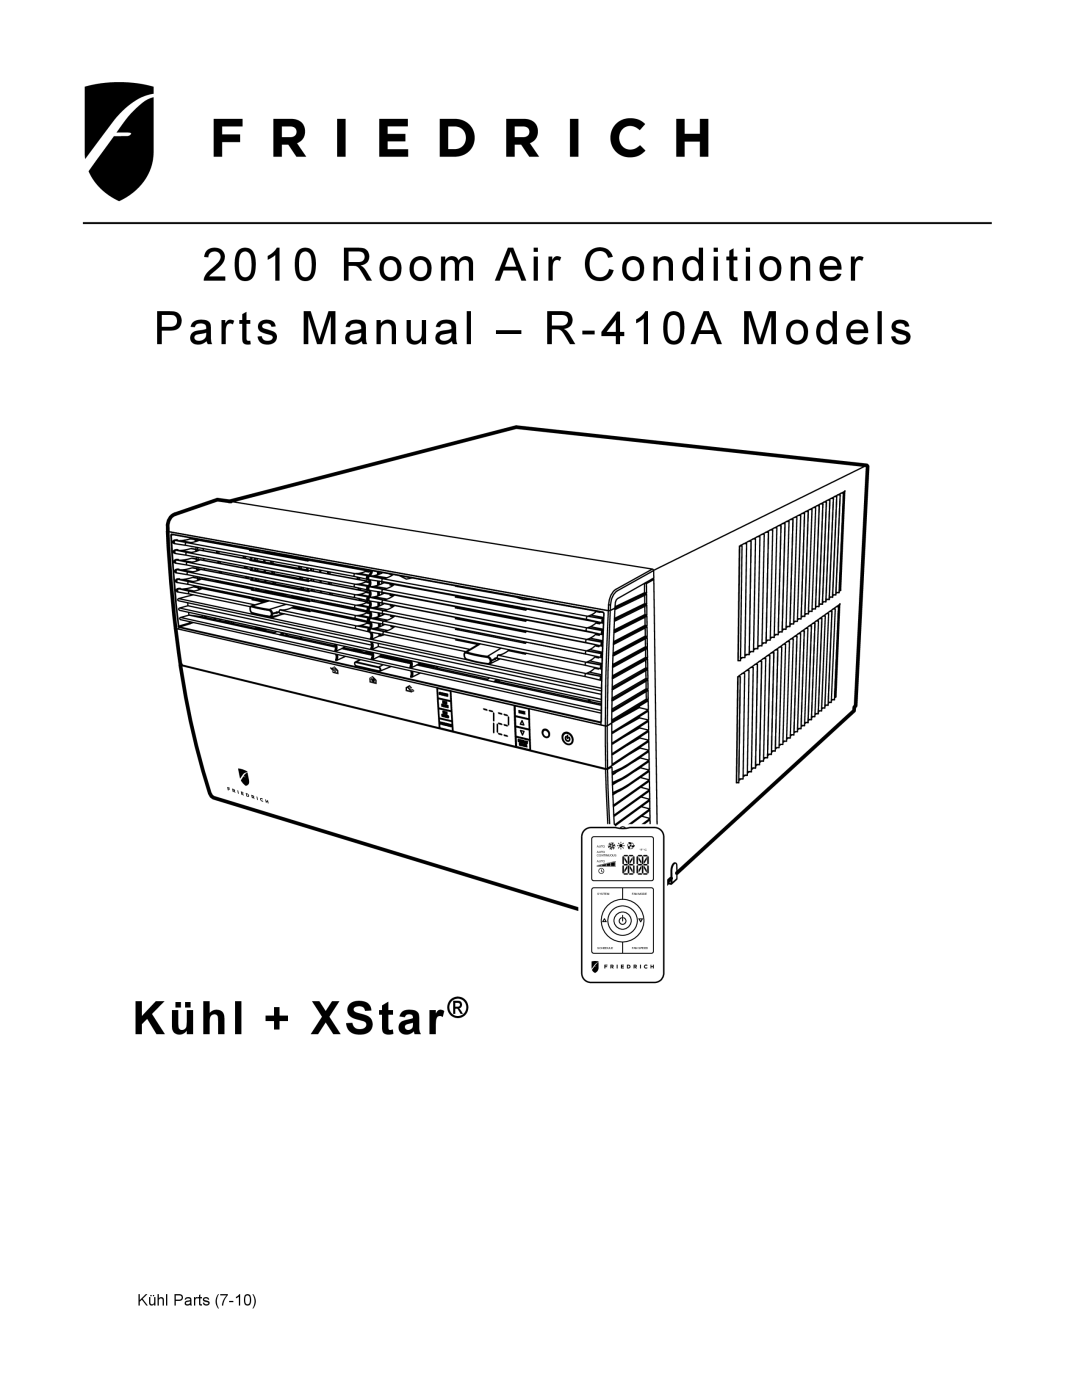 Friedrich service manual R-410AModels, Room Air Conditioners, Volt XQ05M10A, XQ06M10A, XQ08M10A, XQ10M10A, Only, Set Hr 